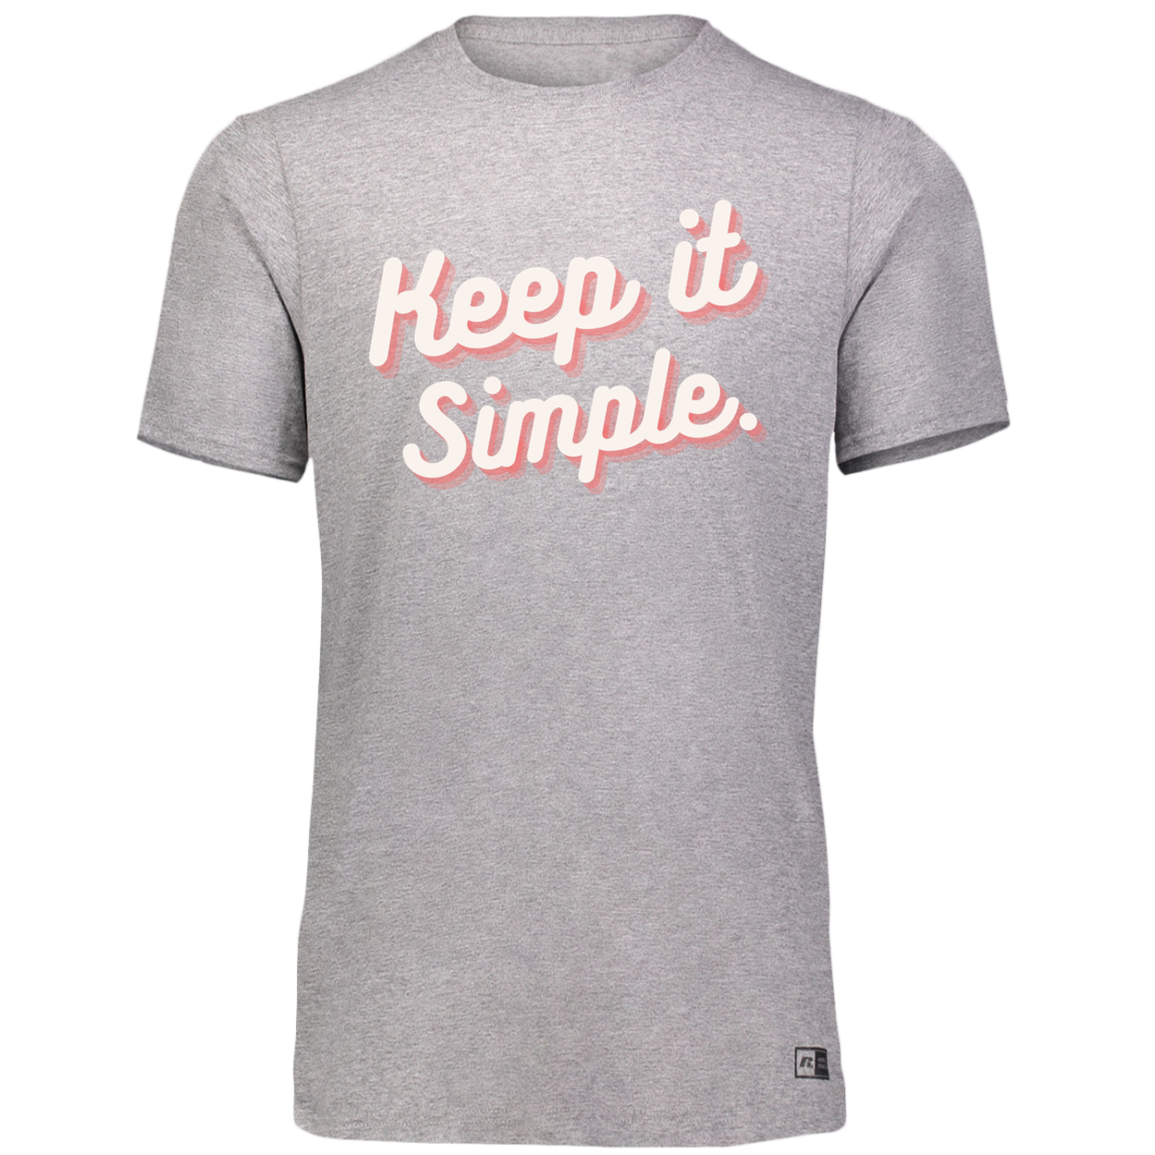 Unisex Dri-Power Tee--Keep it Simple, Encouraging Words Tee, Testing T-shirt